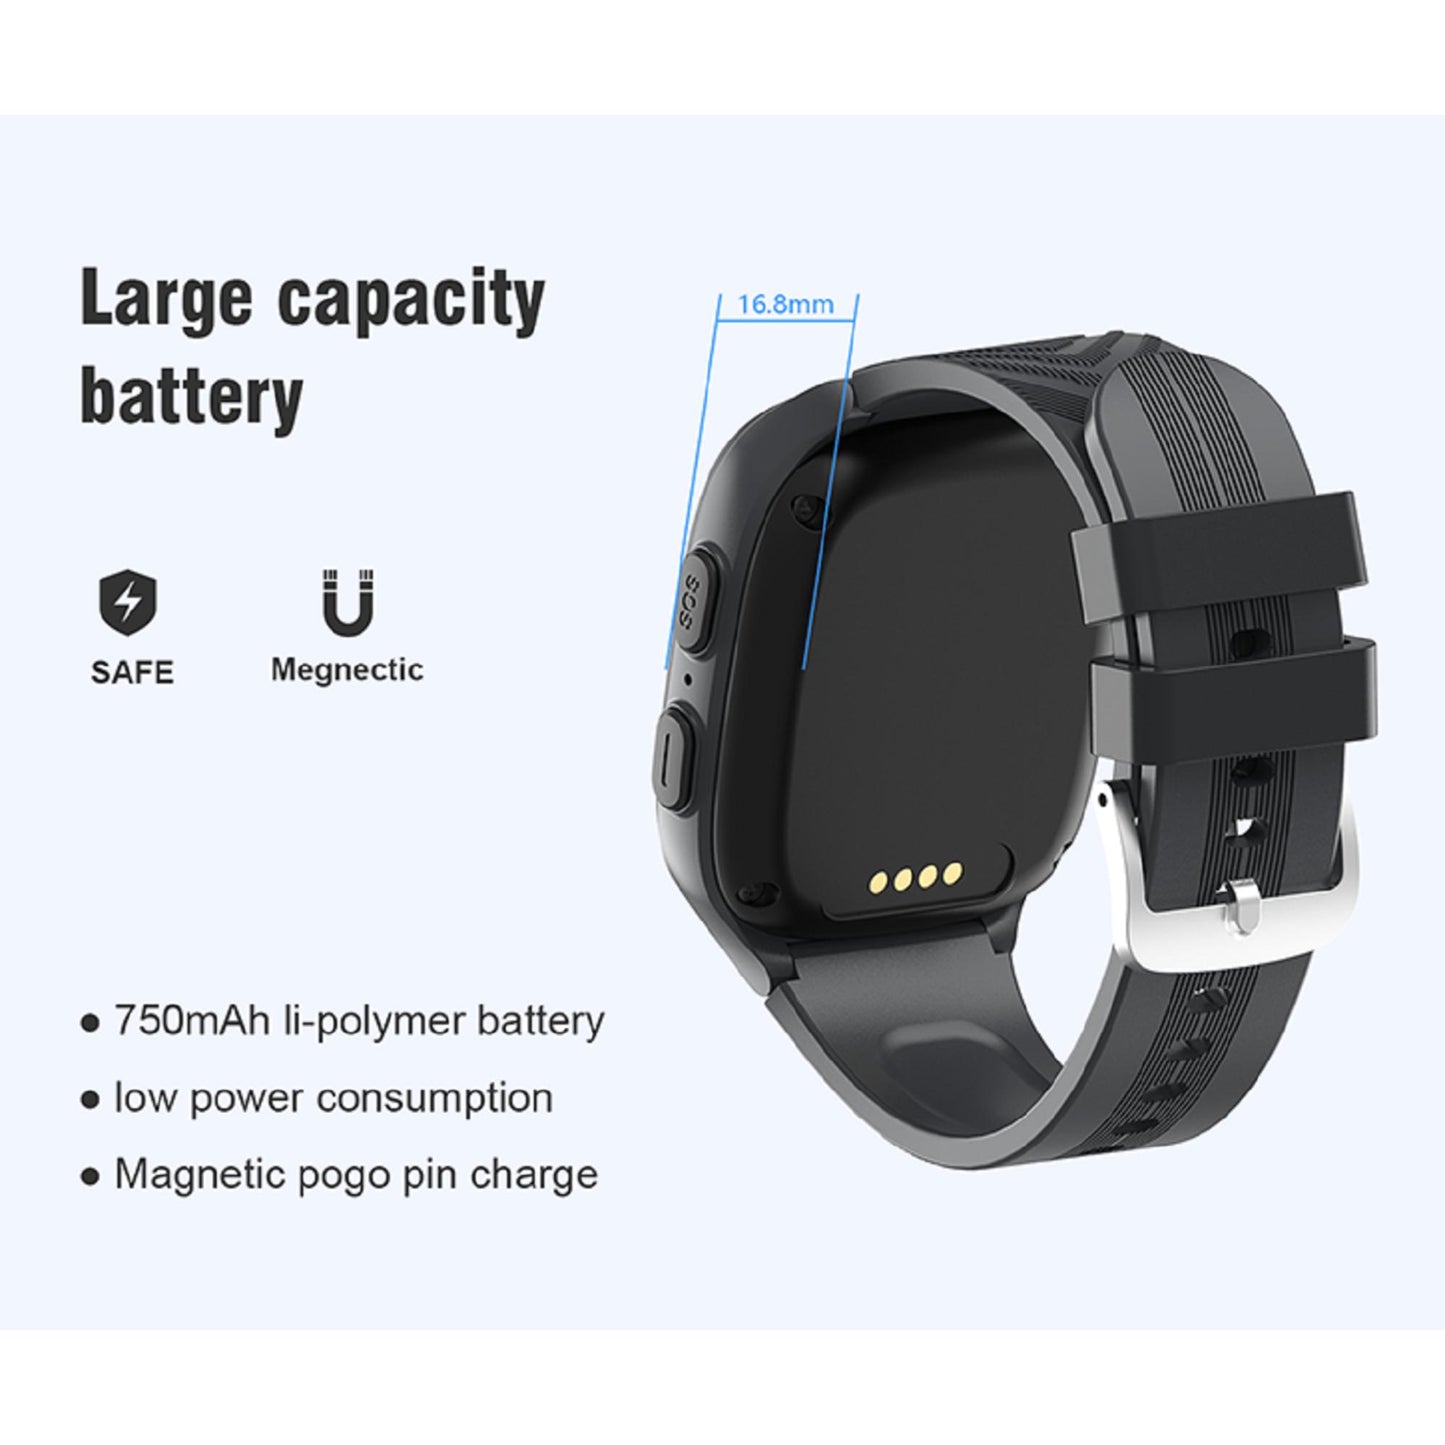 Smartwatch for Children - Karen M LT31, 1.4-inch TFT Screen, Long-lasting 700mAh Battery, GPS. | Blue Chilli Electronics.